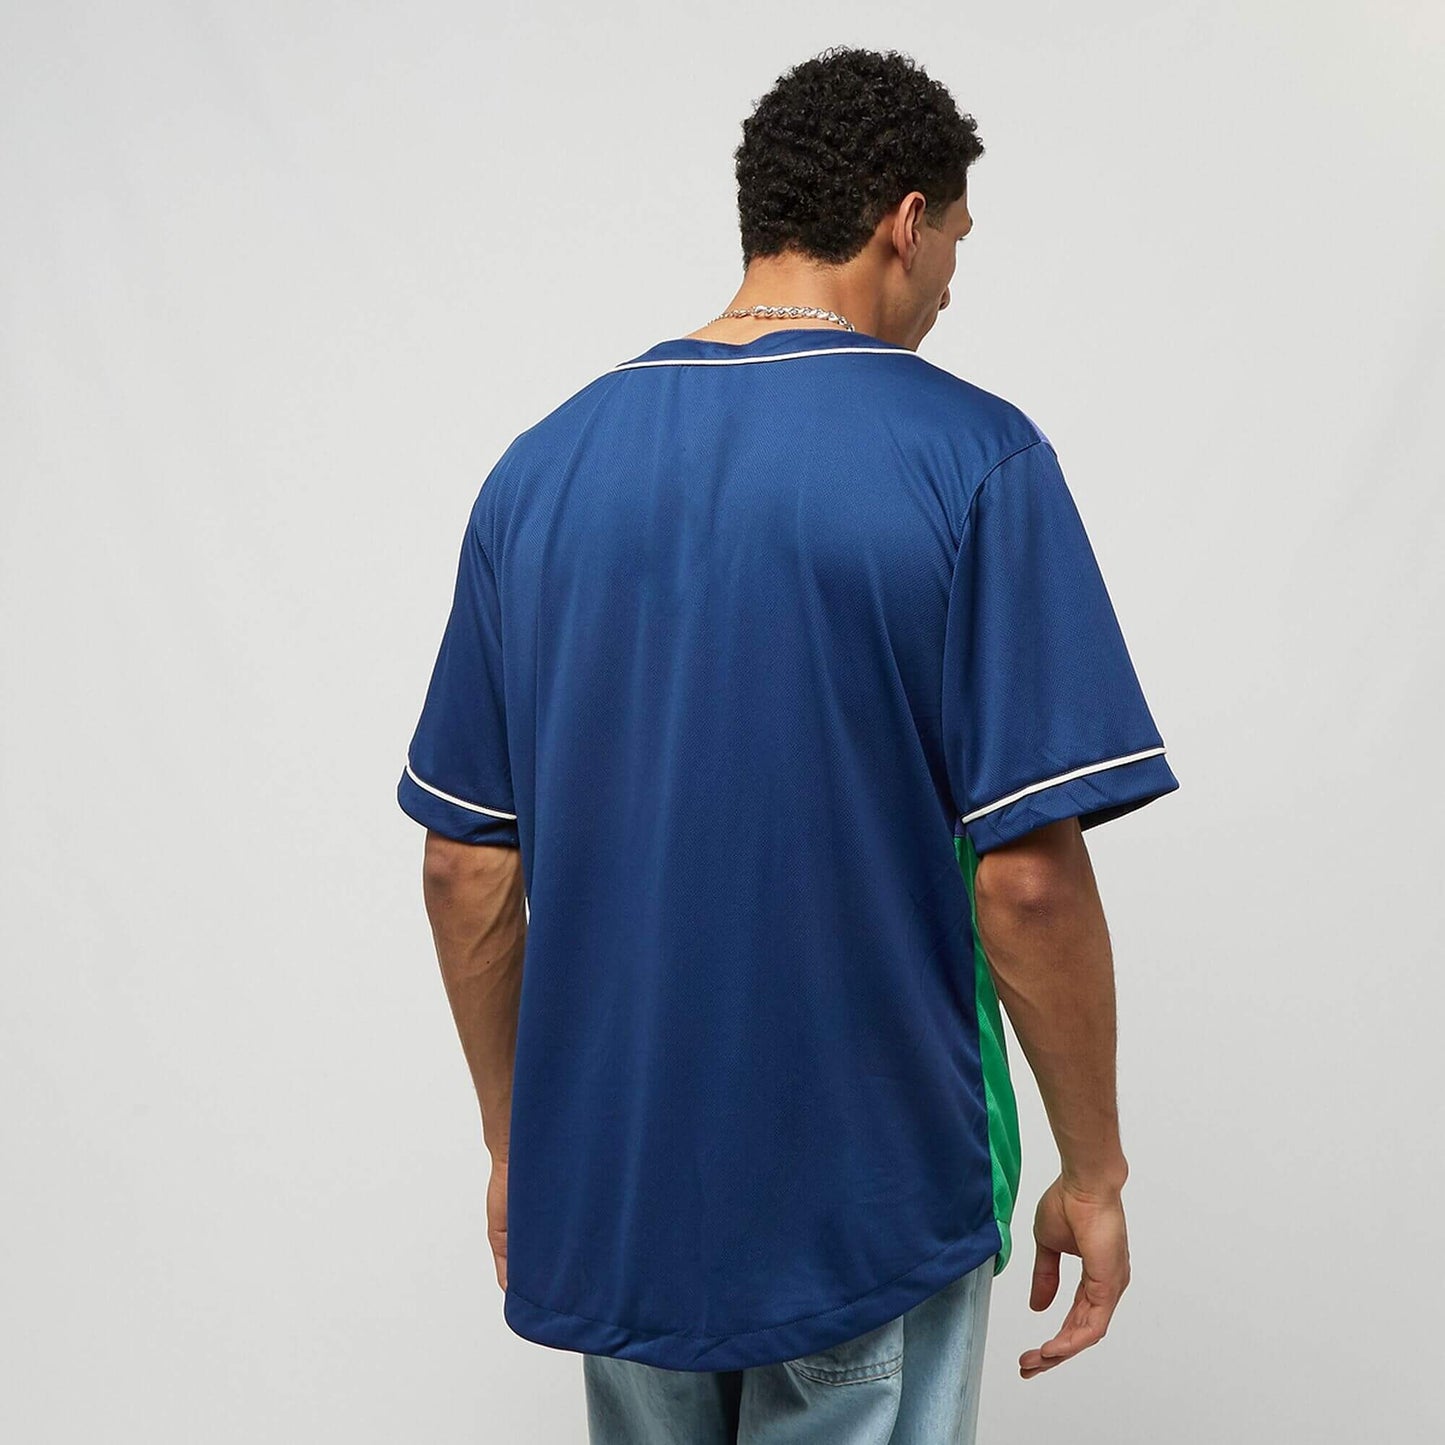 Karl Kani Varsity Block Pinstripe Baseball Shirt blue/white/navy